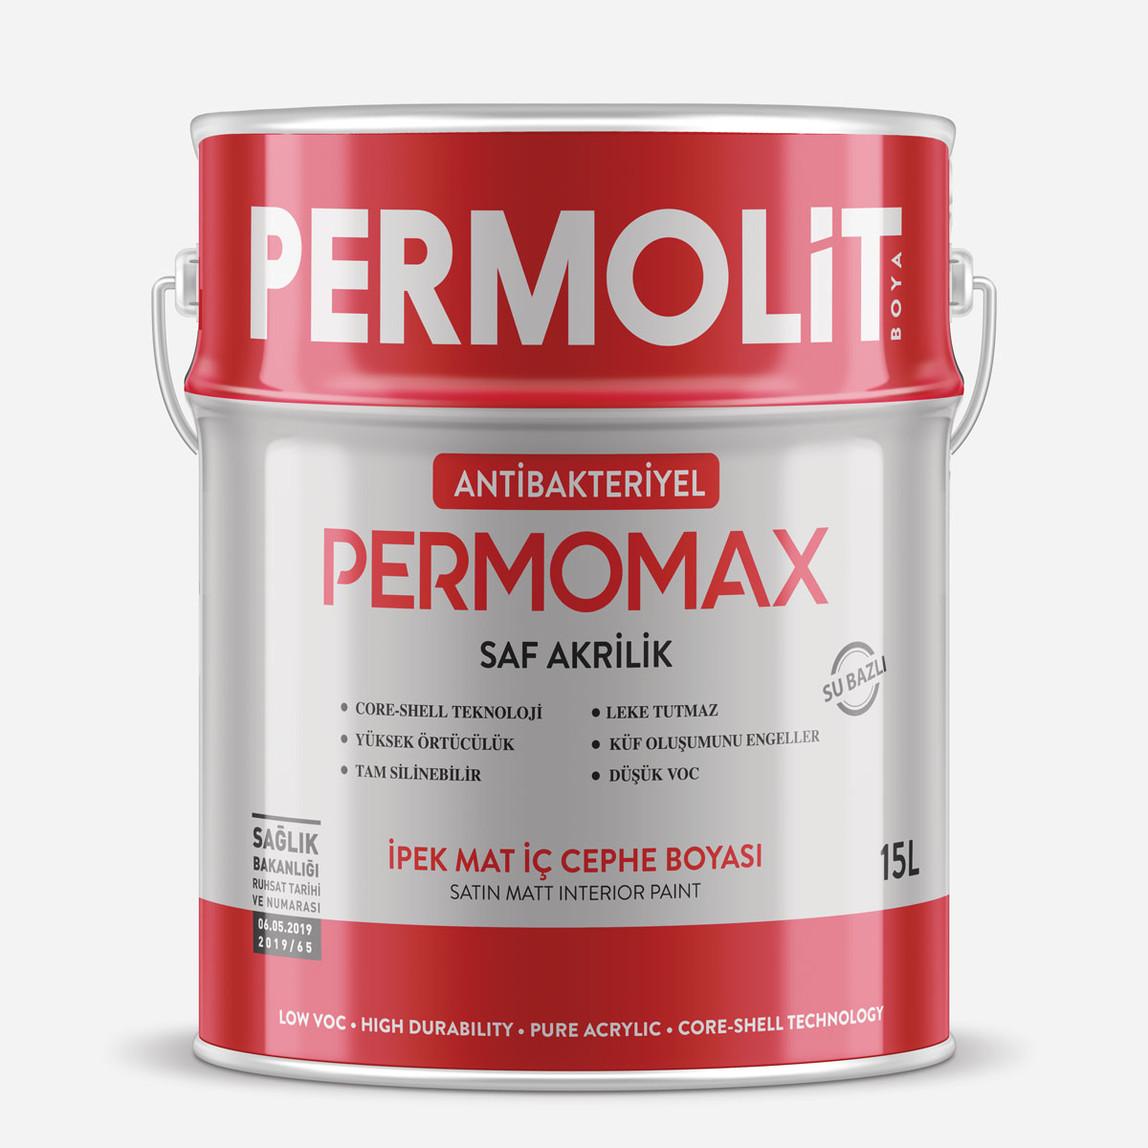    Permolit 15 Litre Permomax Antibakteriyel İpek Mat İç Cephe Boyası 